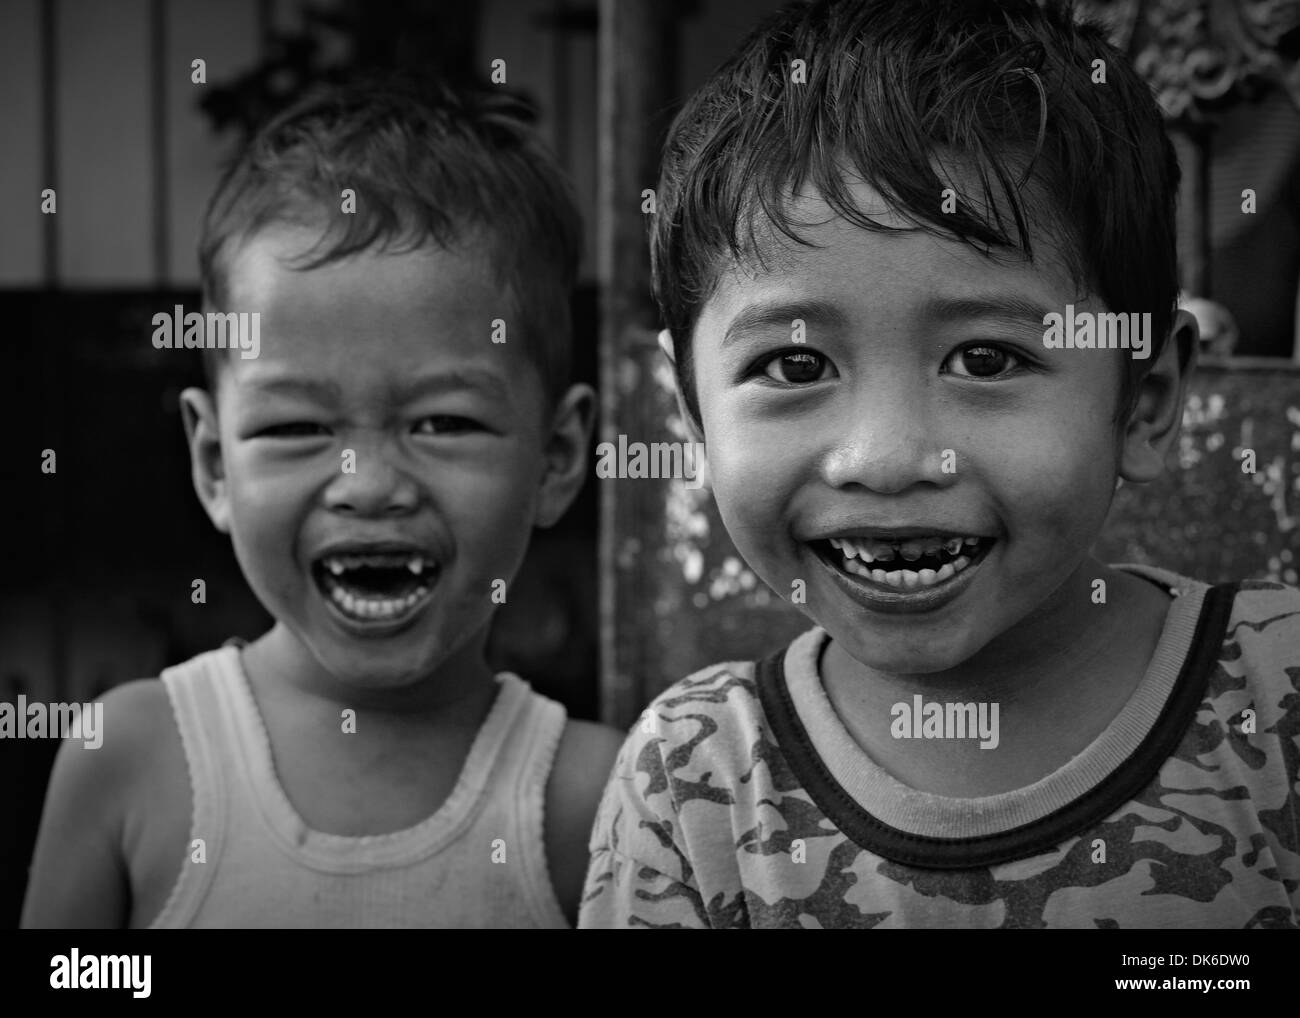 smiling children Stock Photo